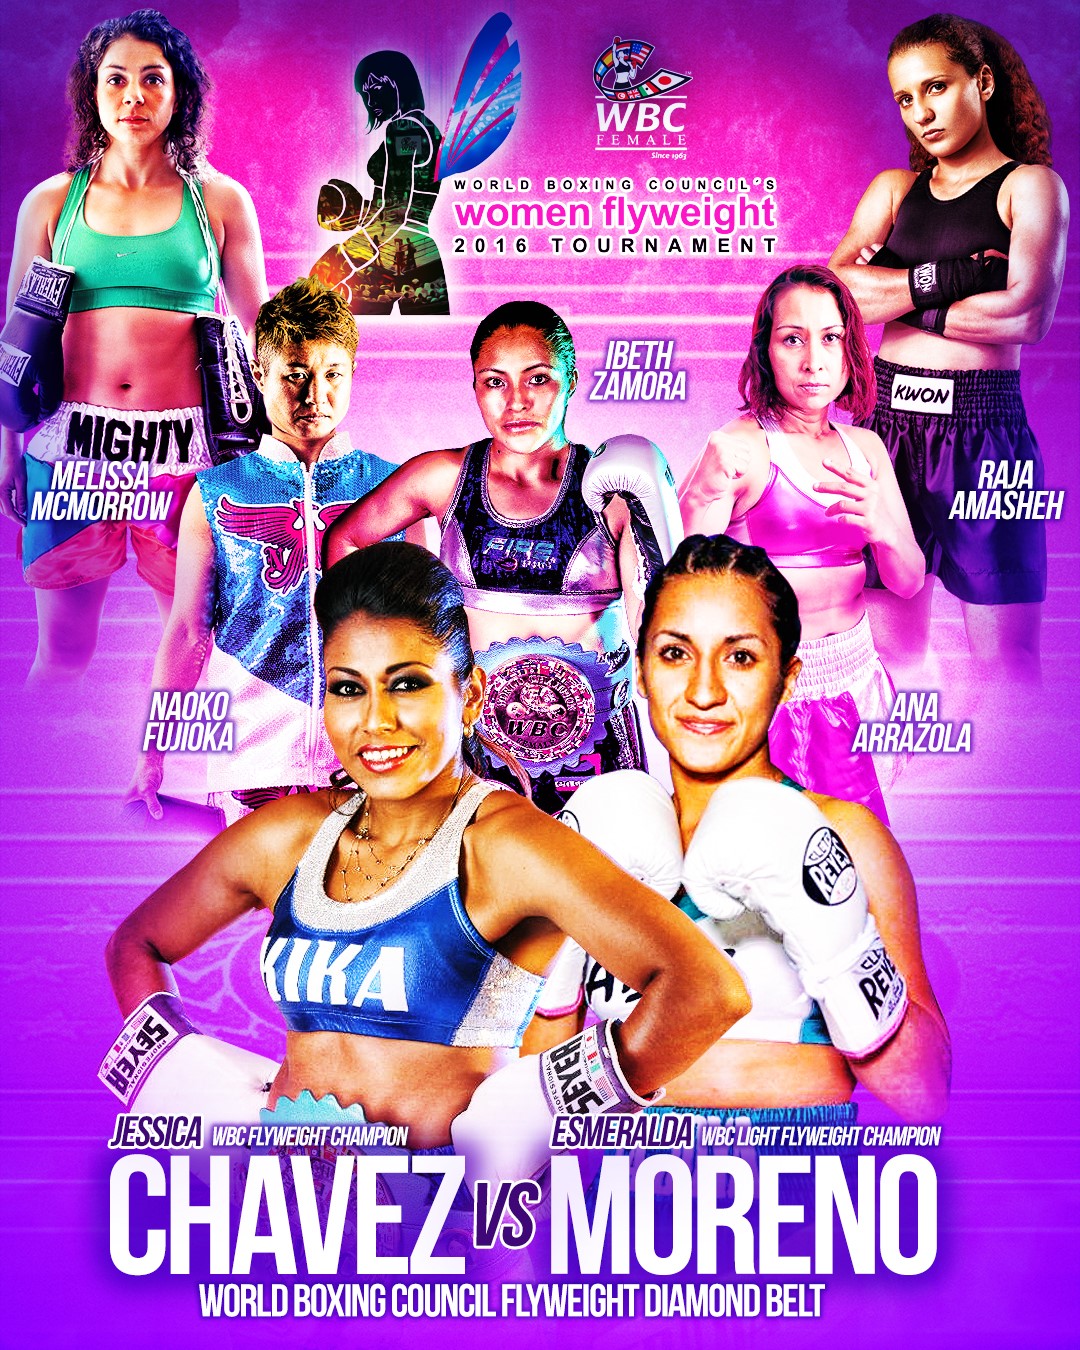 Chavez vs. Moreno WBC Diamond Belt Championship to Contribute to Mexico Earthquake Relief